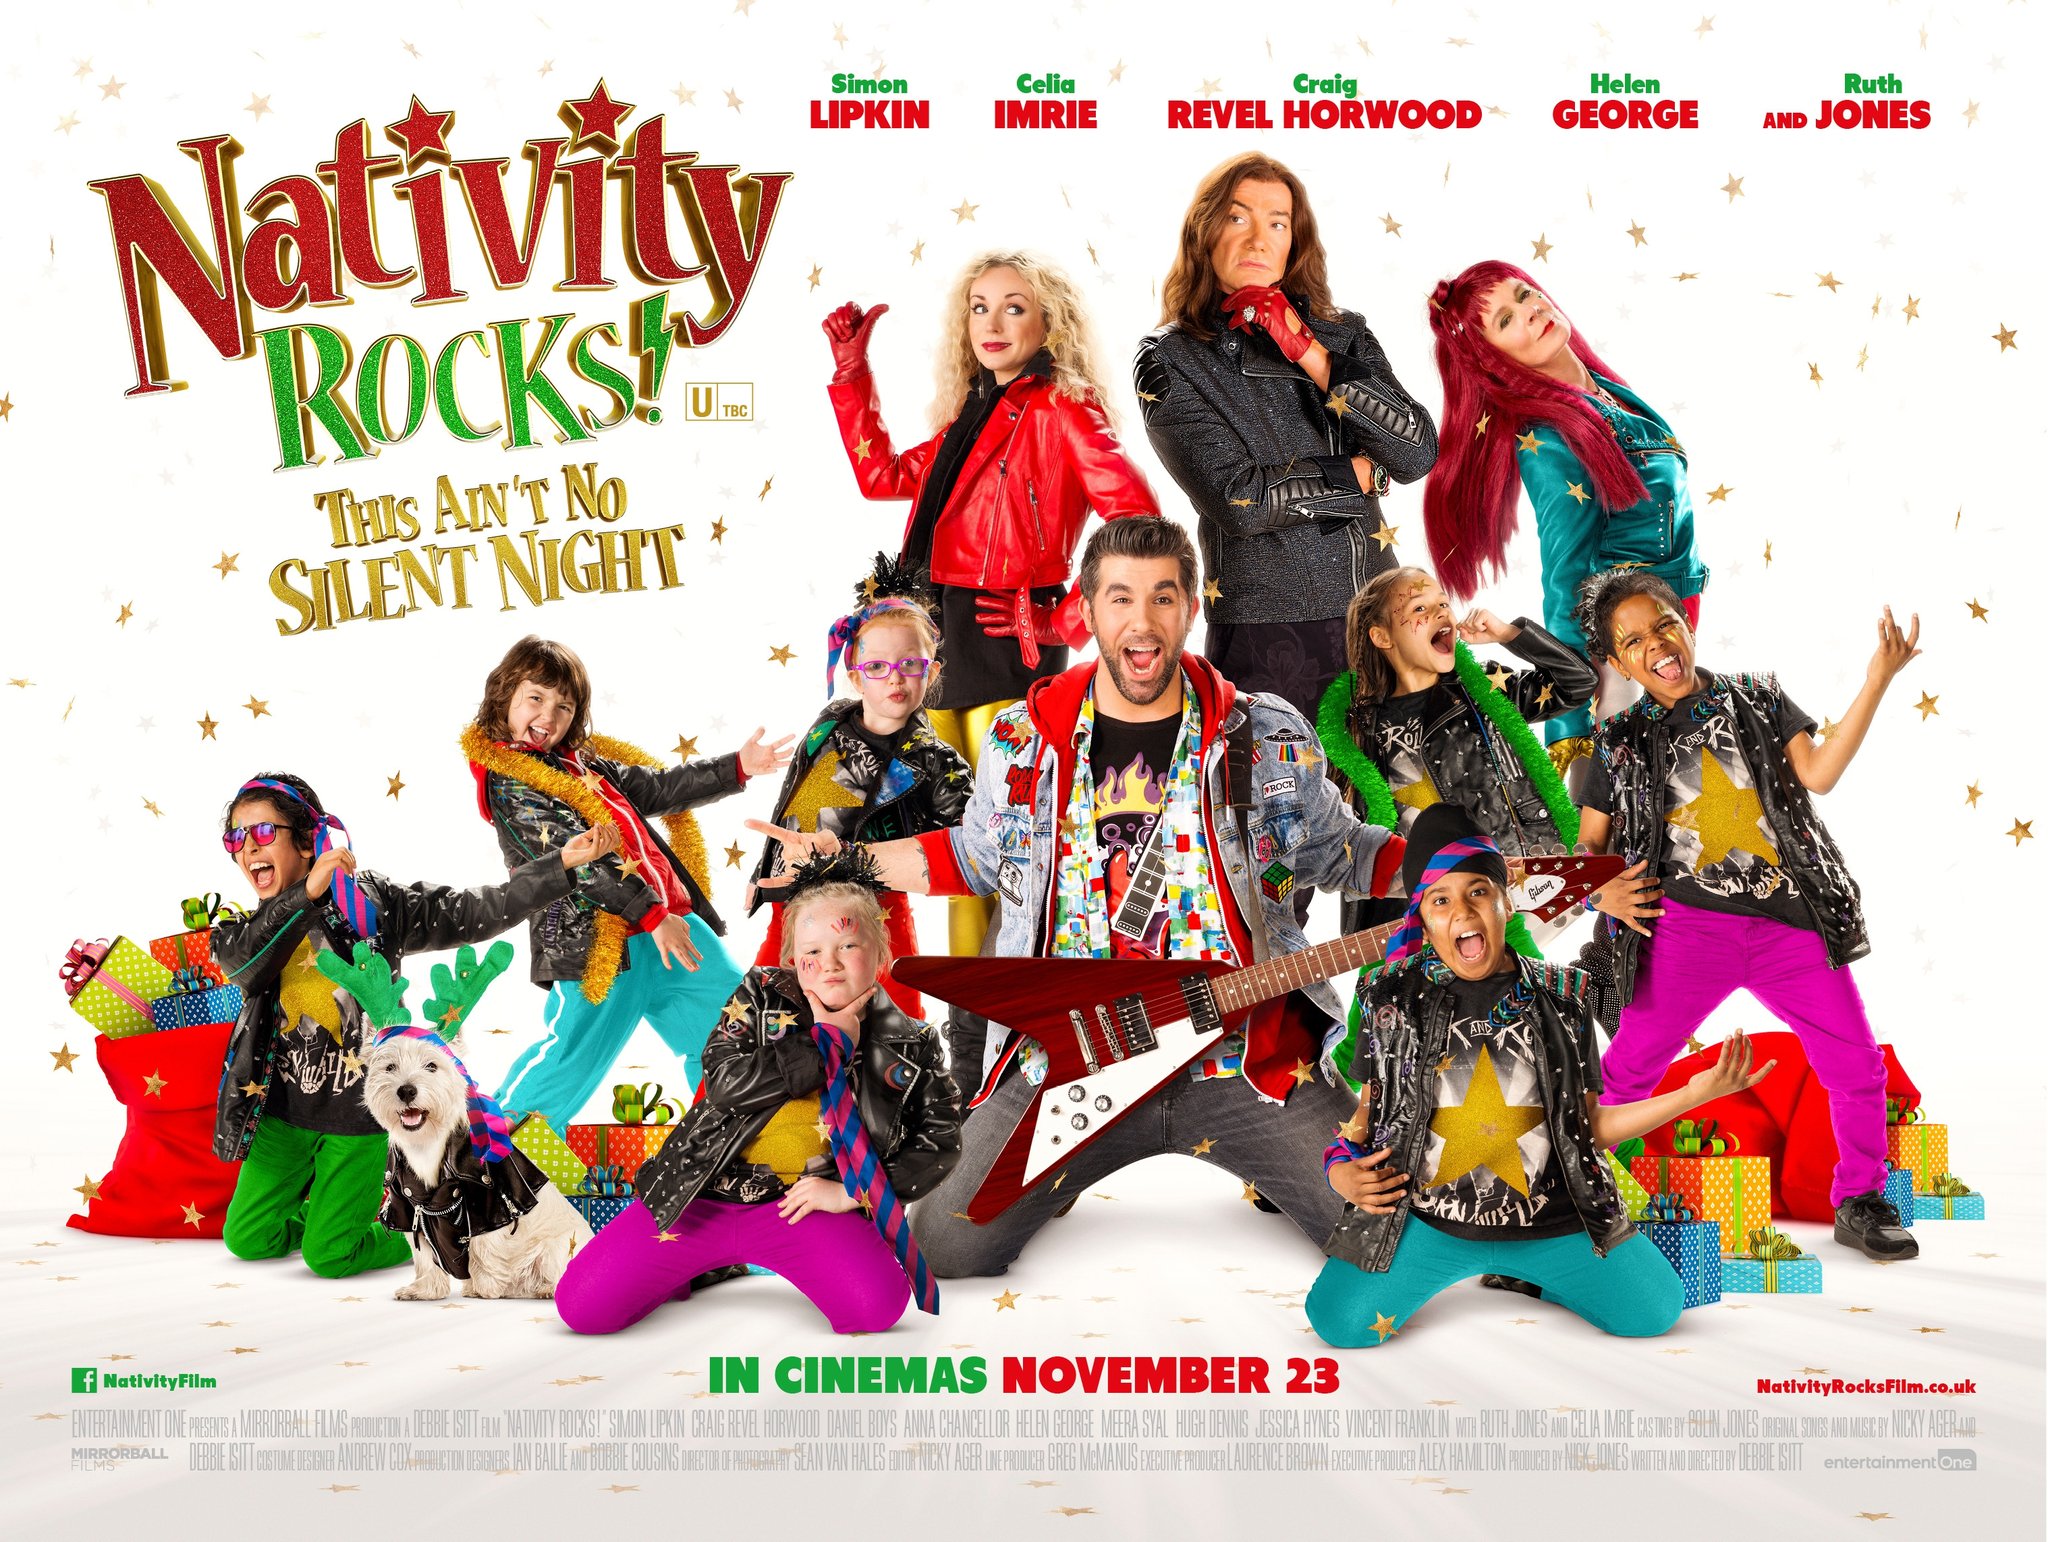 Simon Lipkin and Ramin Karimloo in ‘Nativity Rocks!’